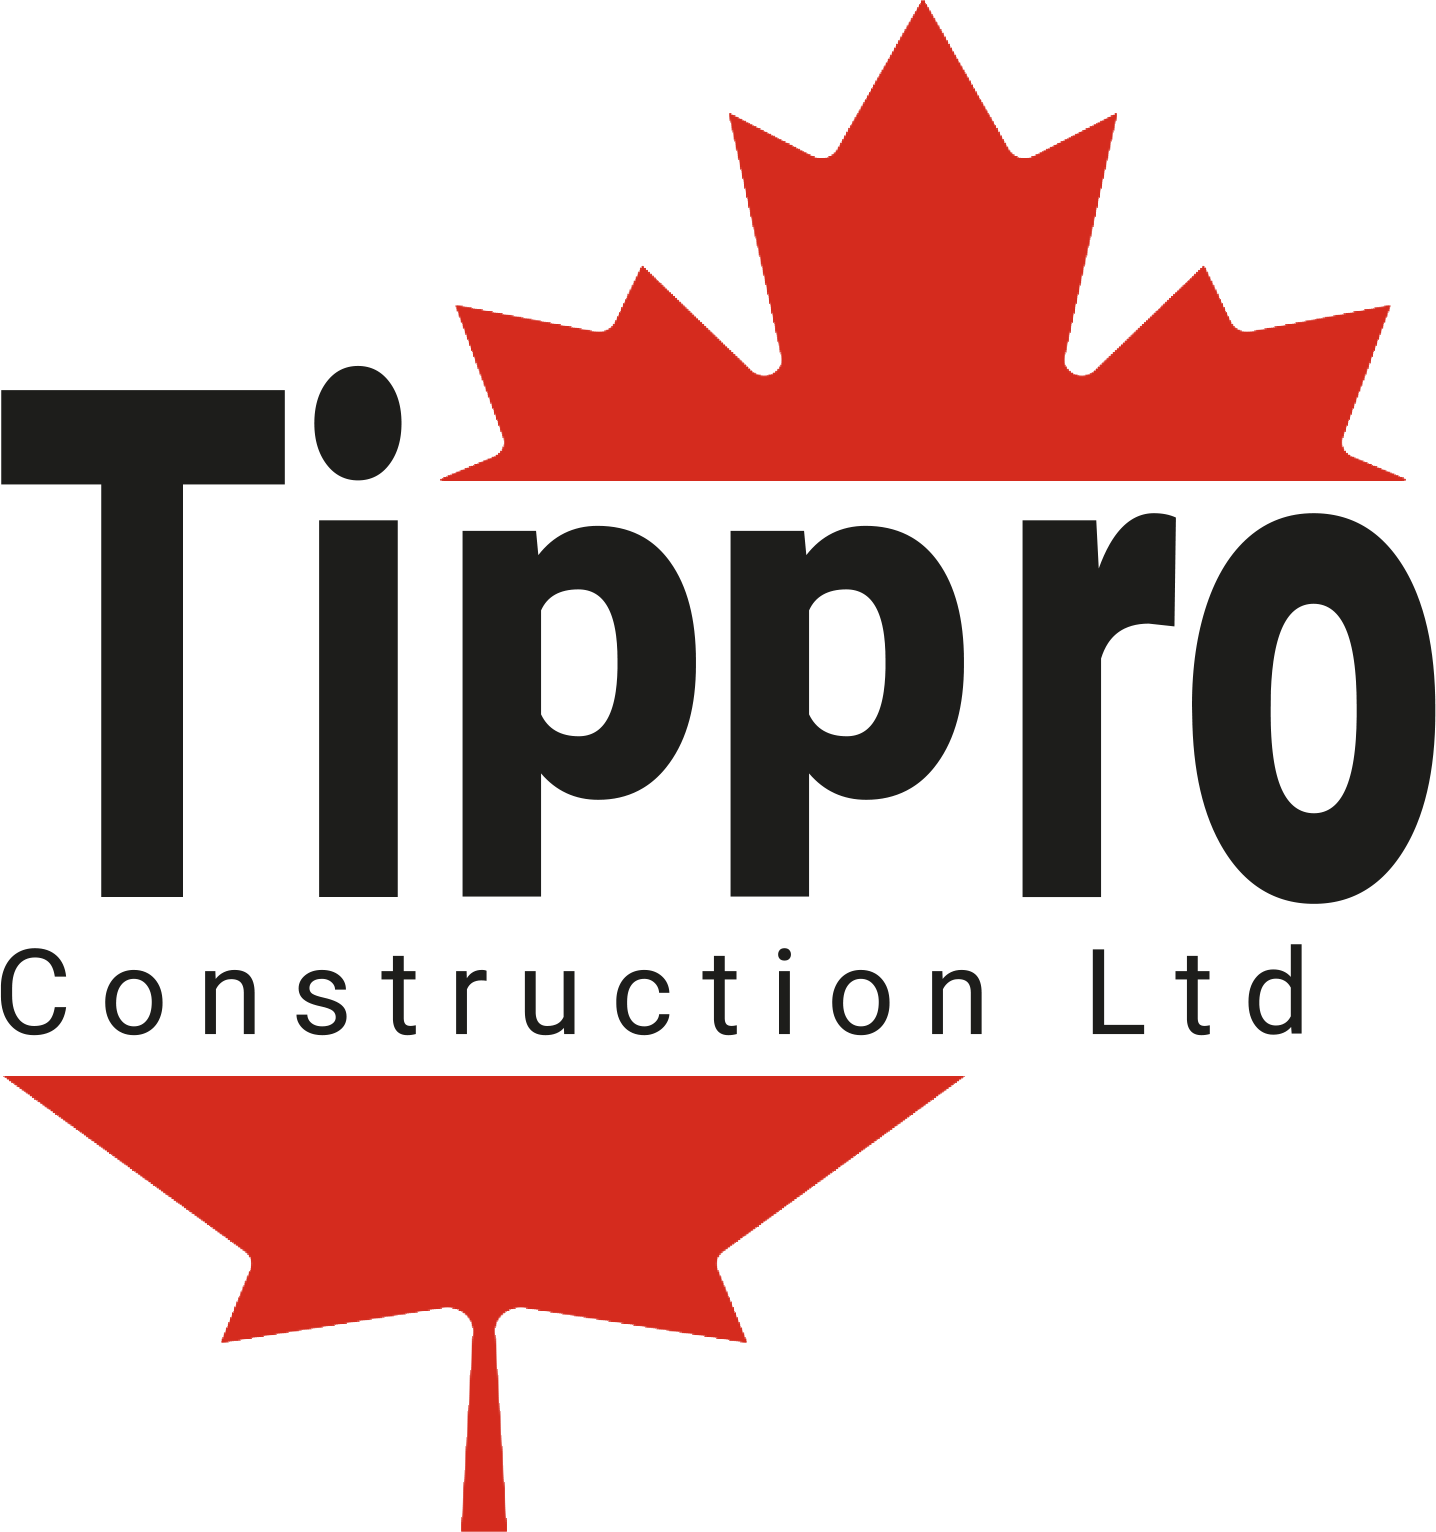 Tippro Construction Ltd.'s logo